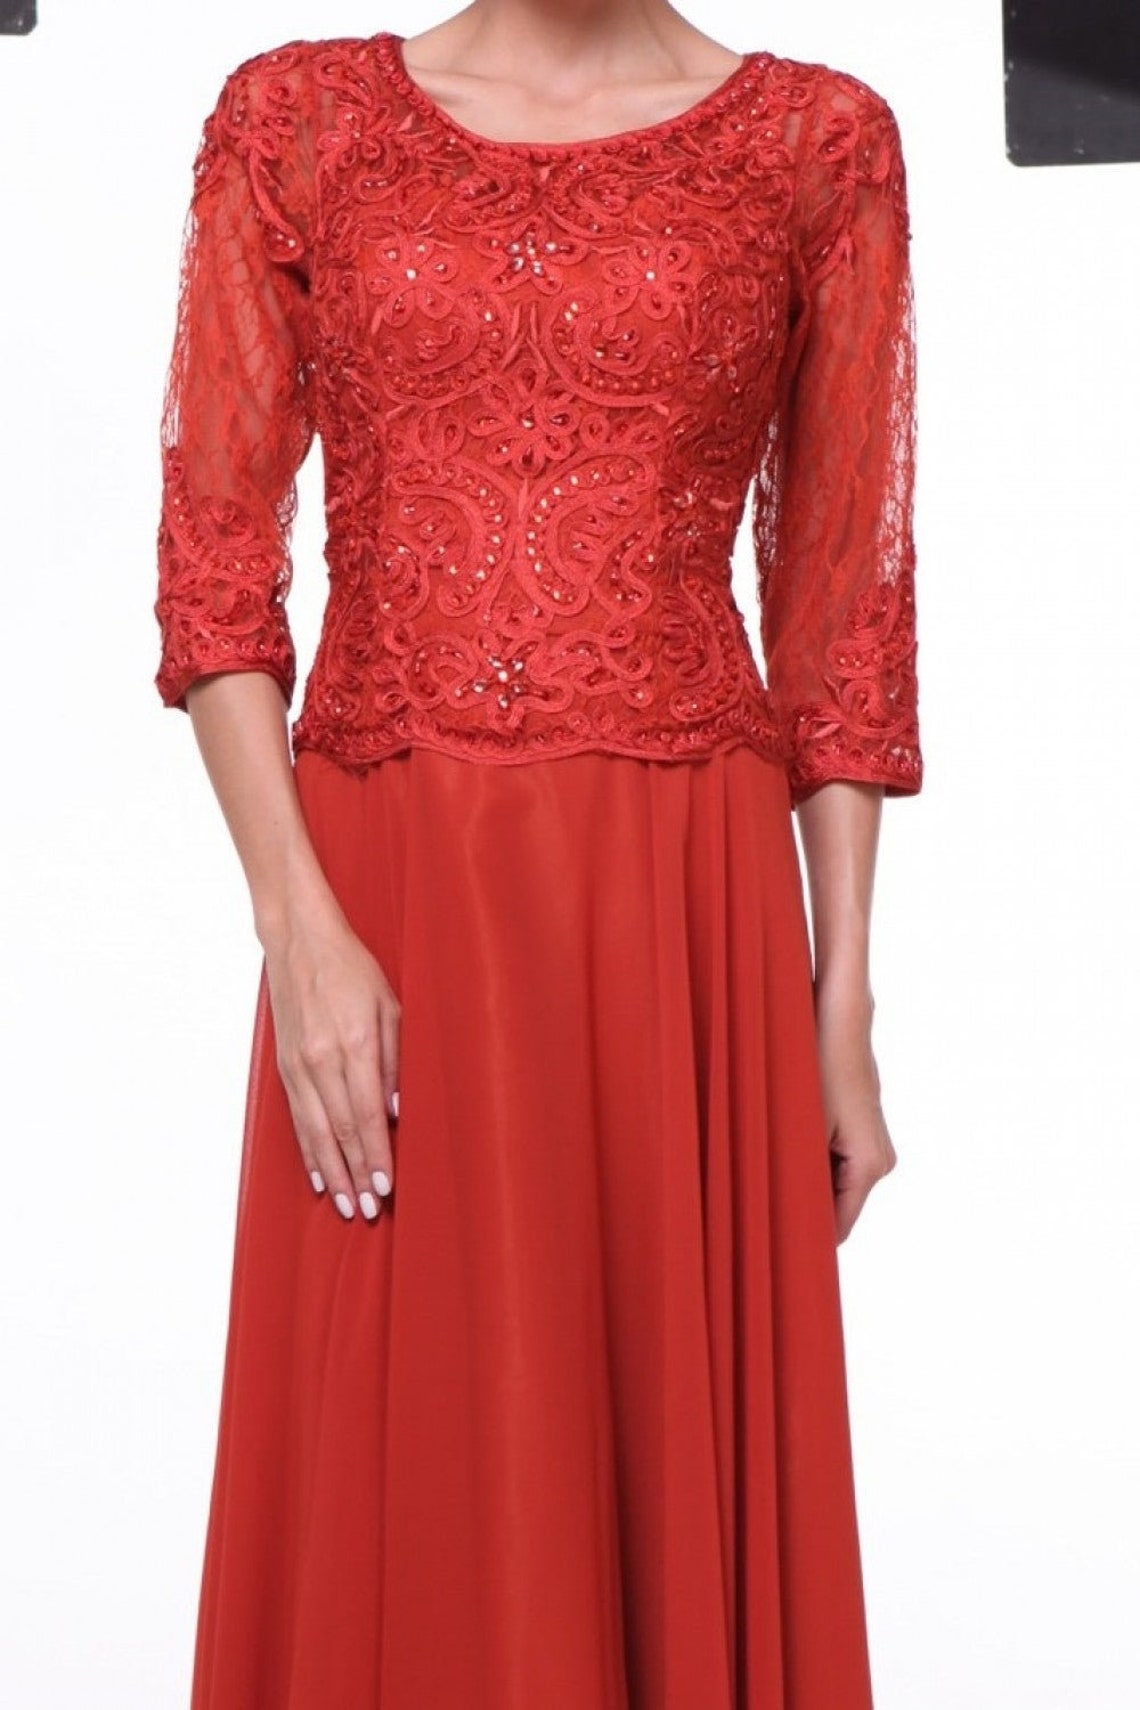 Beaded Lace Chiffon Prom & Ball Dress Sequin 3/4 Sleeves - Etsy